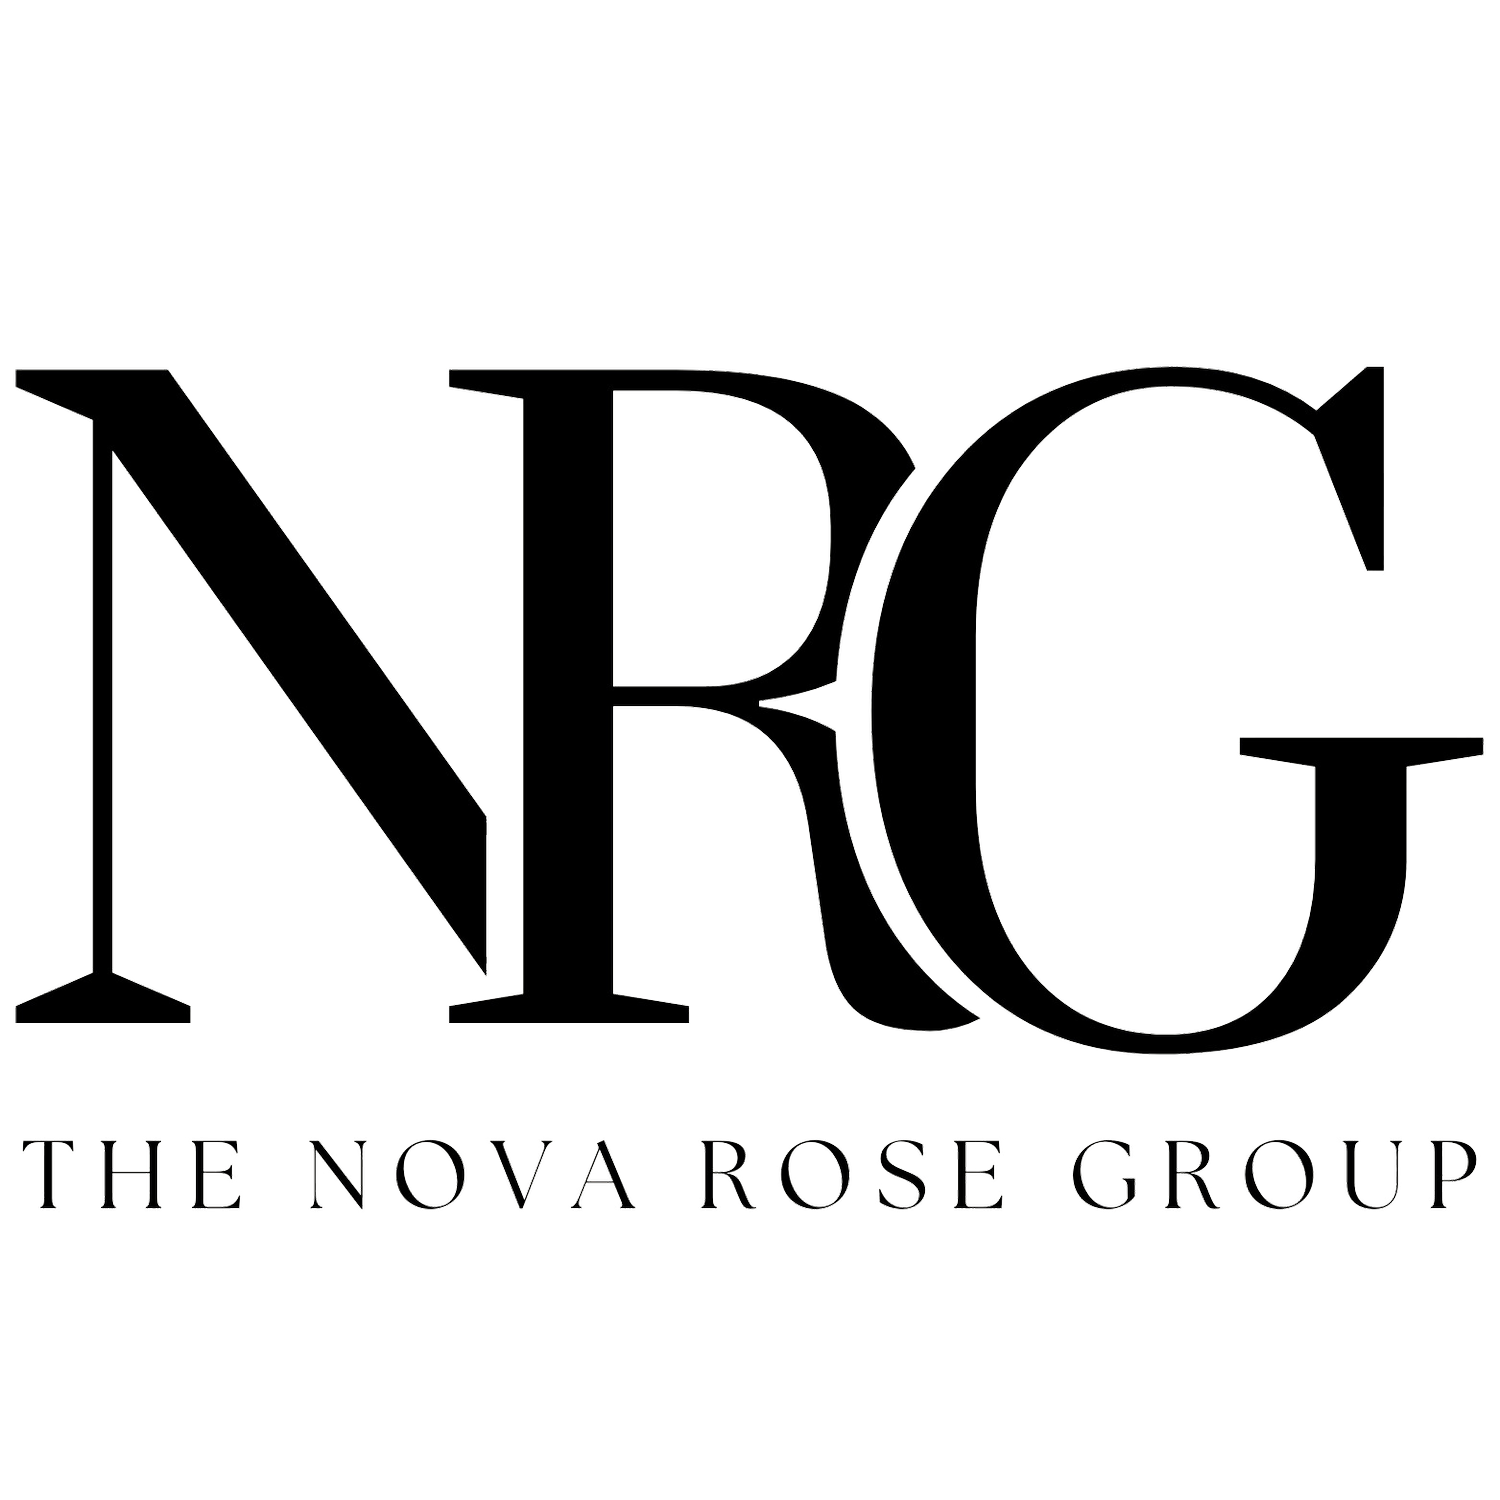 The Nova Rose Group